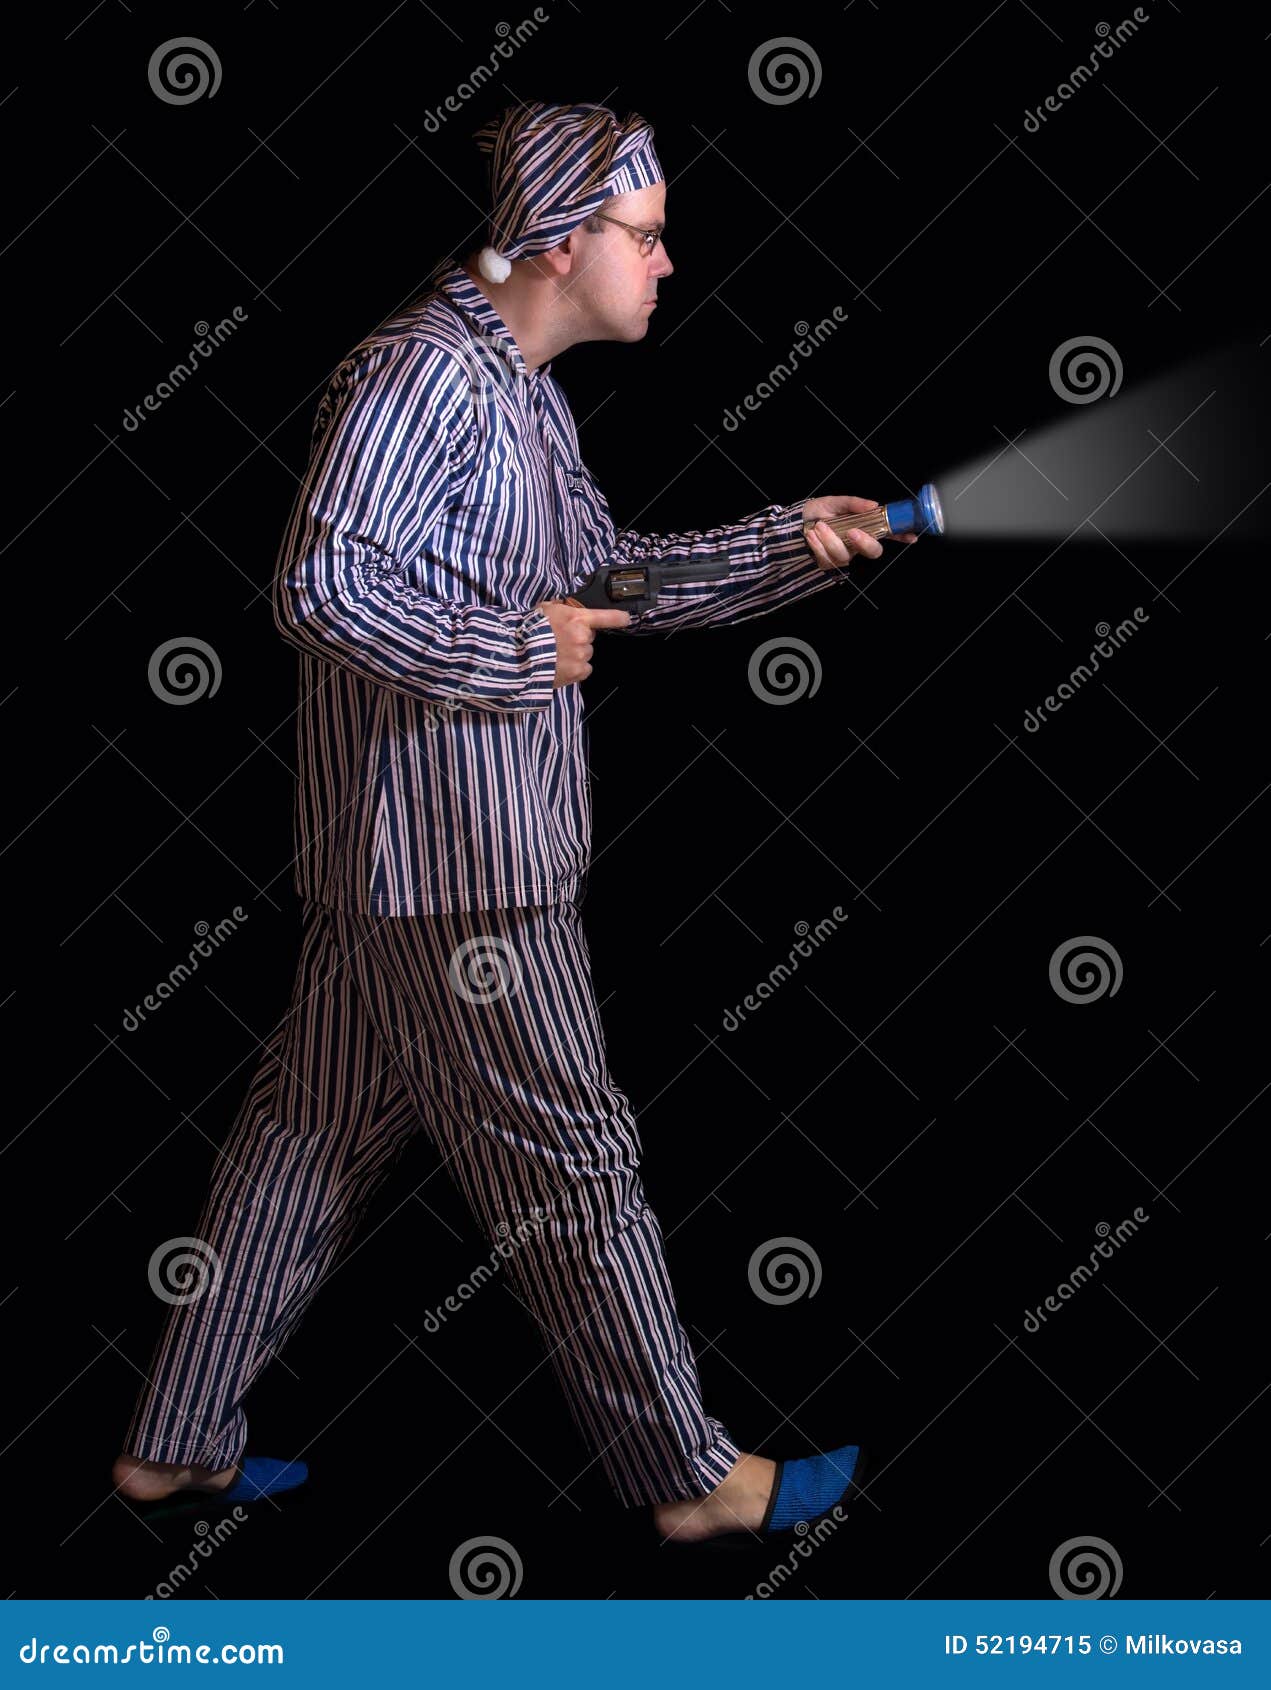 Man In Pajamas With Gun Stock Photo - Image: 52194715